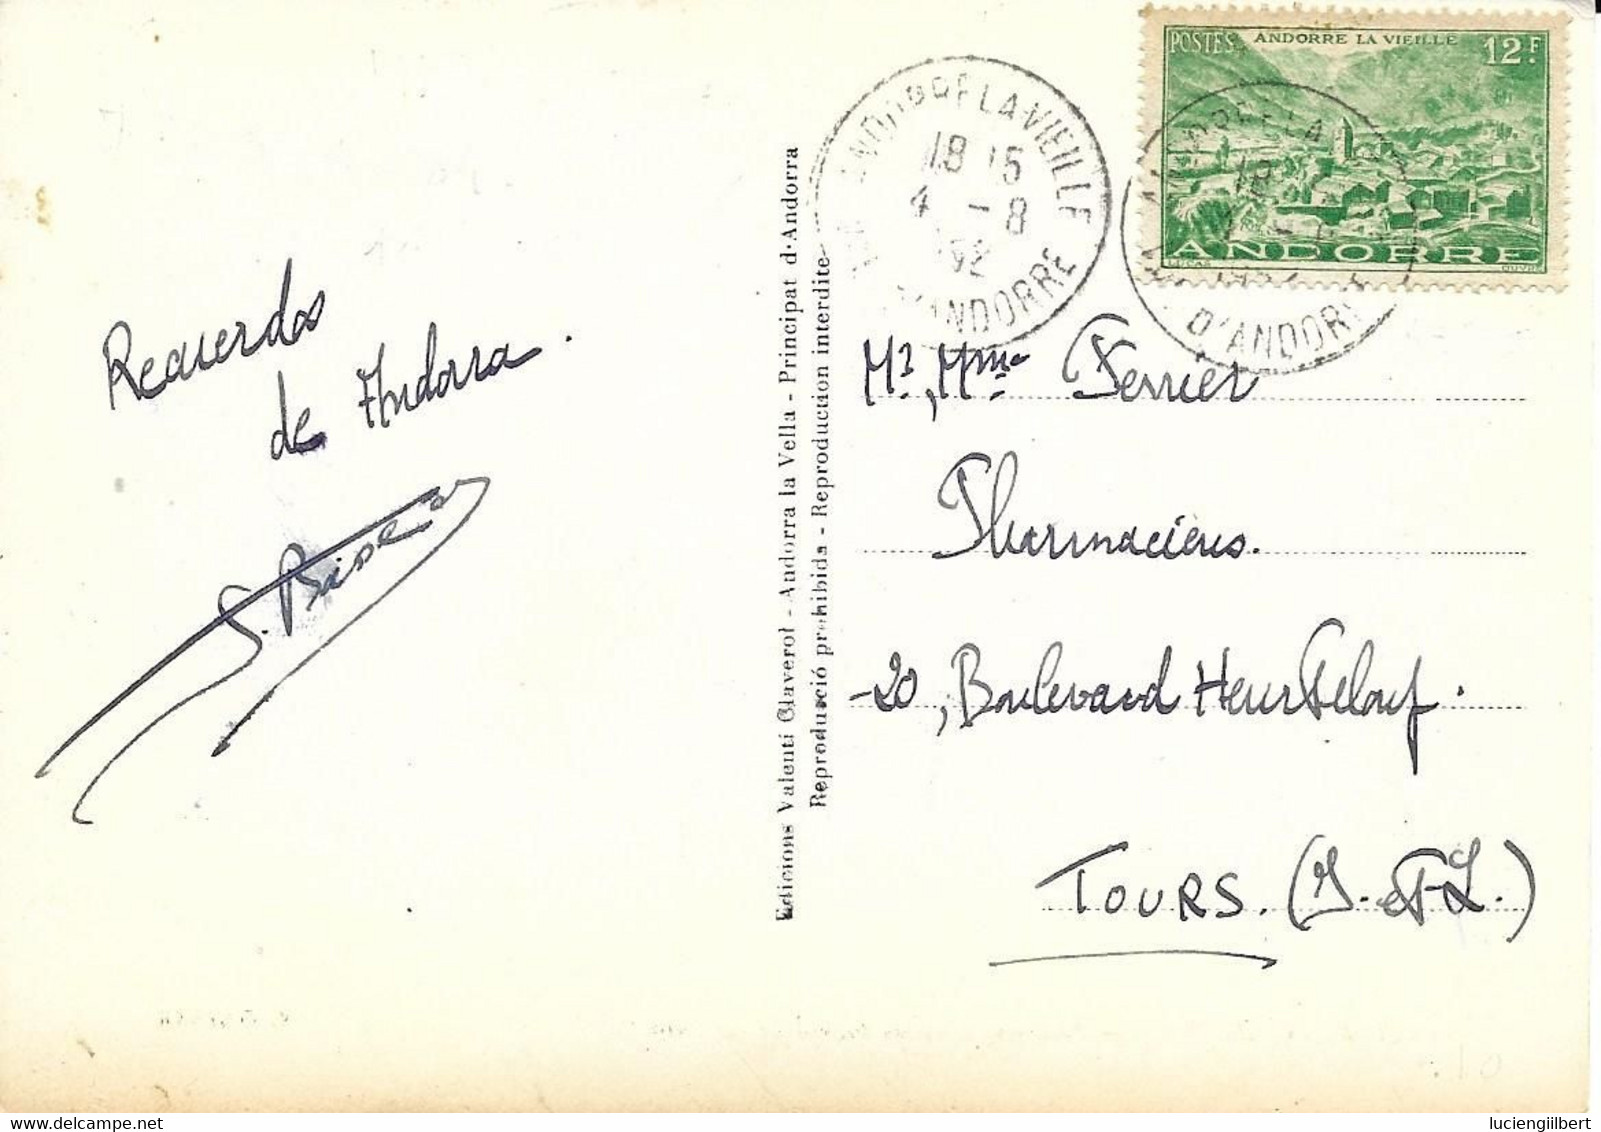 ANDORRE -    TIMBRES  N° 130 -  MAISON DES VALLEES  -  TARIF CP 6 01 49  -  1952 - CACHET MANUEL ANDORRE LA VIEILLE - Cartas & Documentos